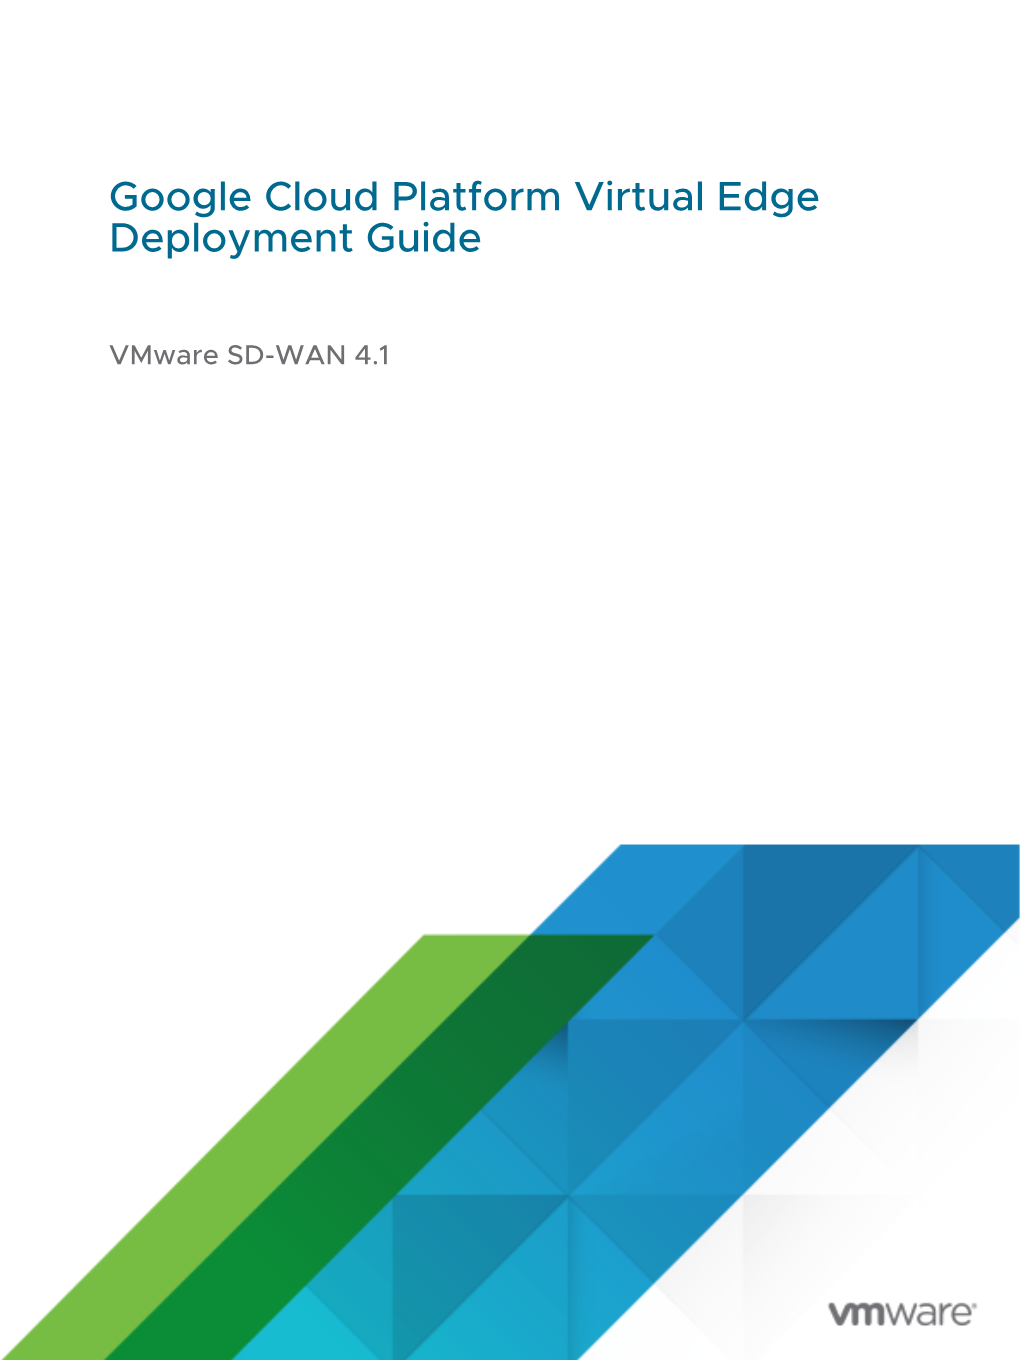 Google Cloud Platform Virtual Edge Deployment Guide